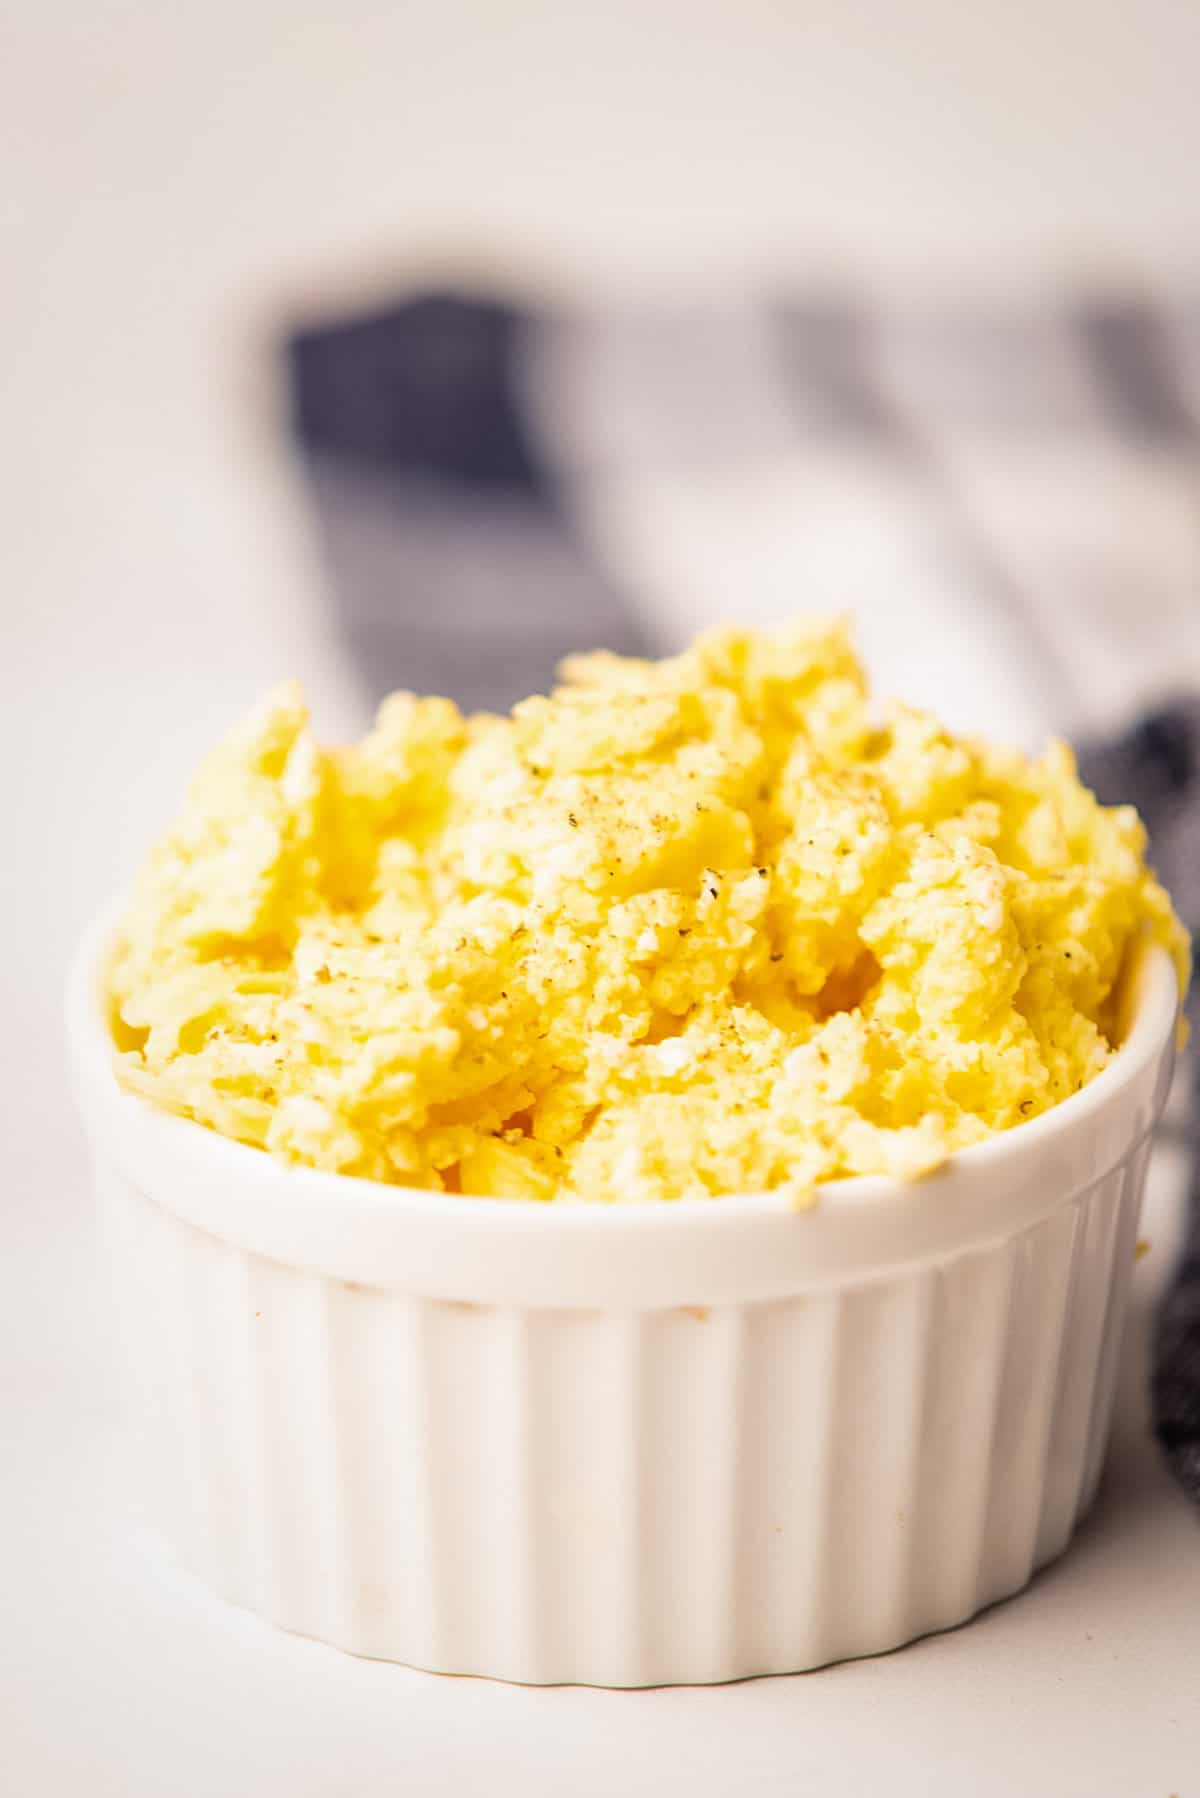 An image of microwave scrambled eggs inside a ramekin.